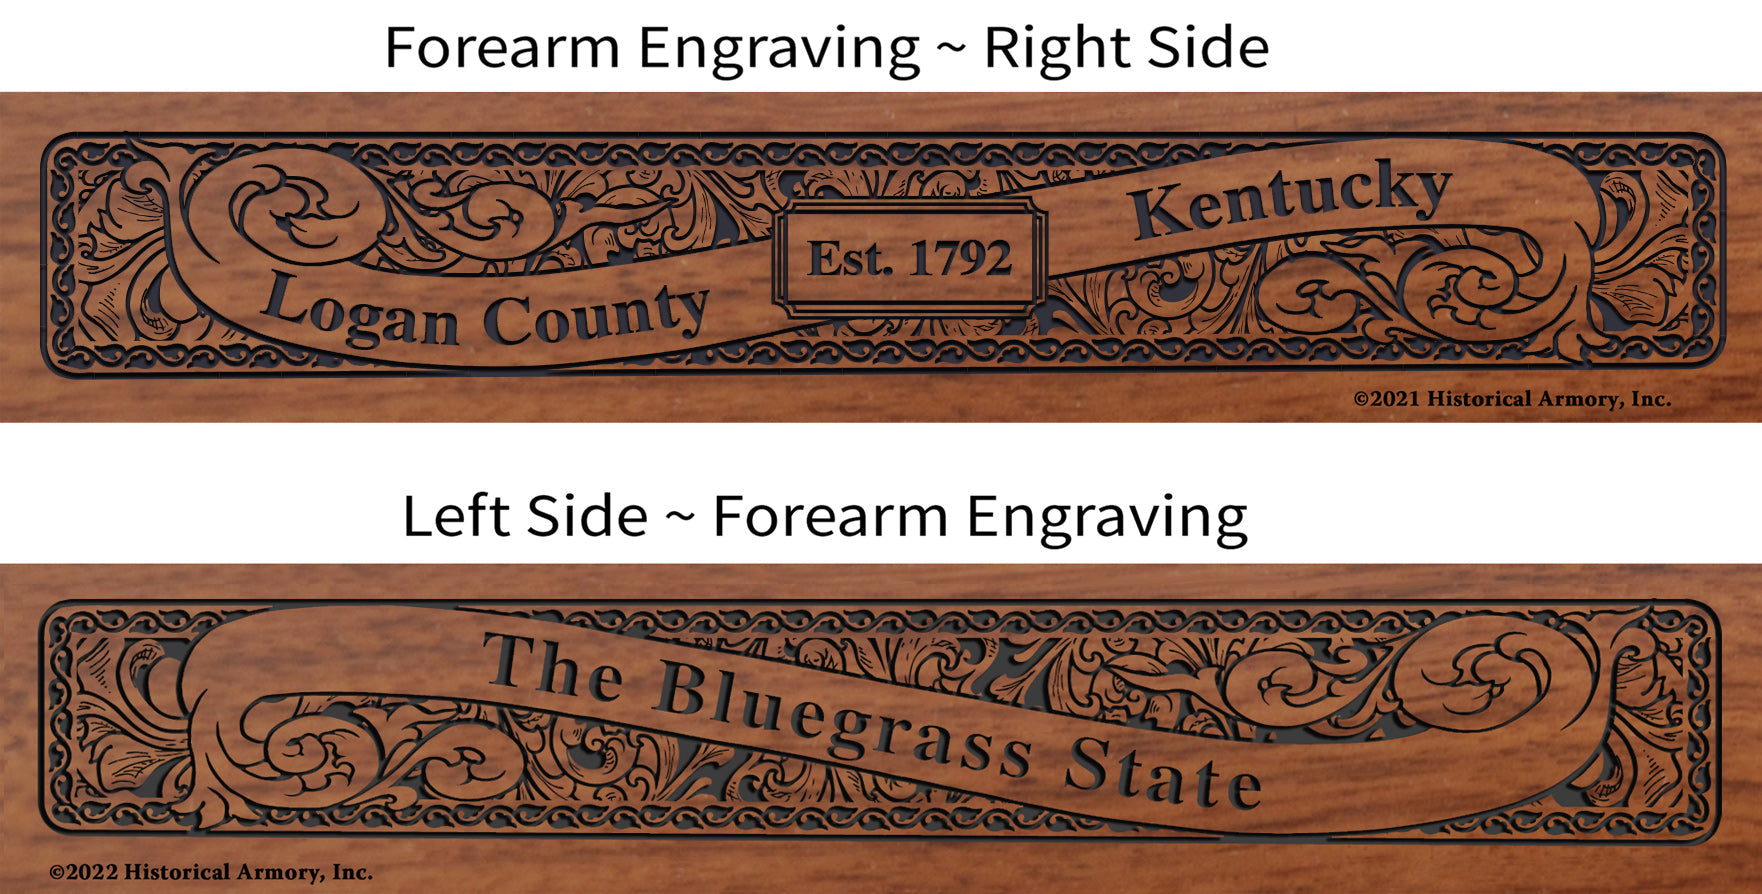 Logan County Kentucky Engraved Rifle Forearm